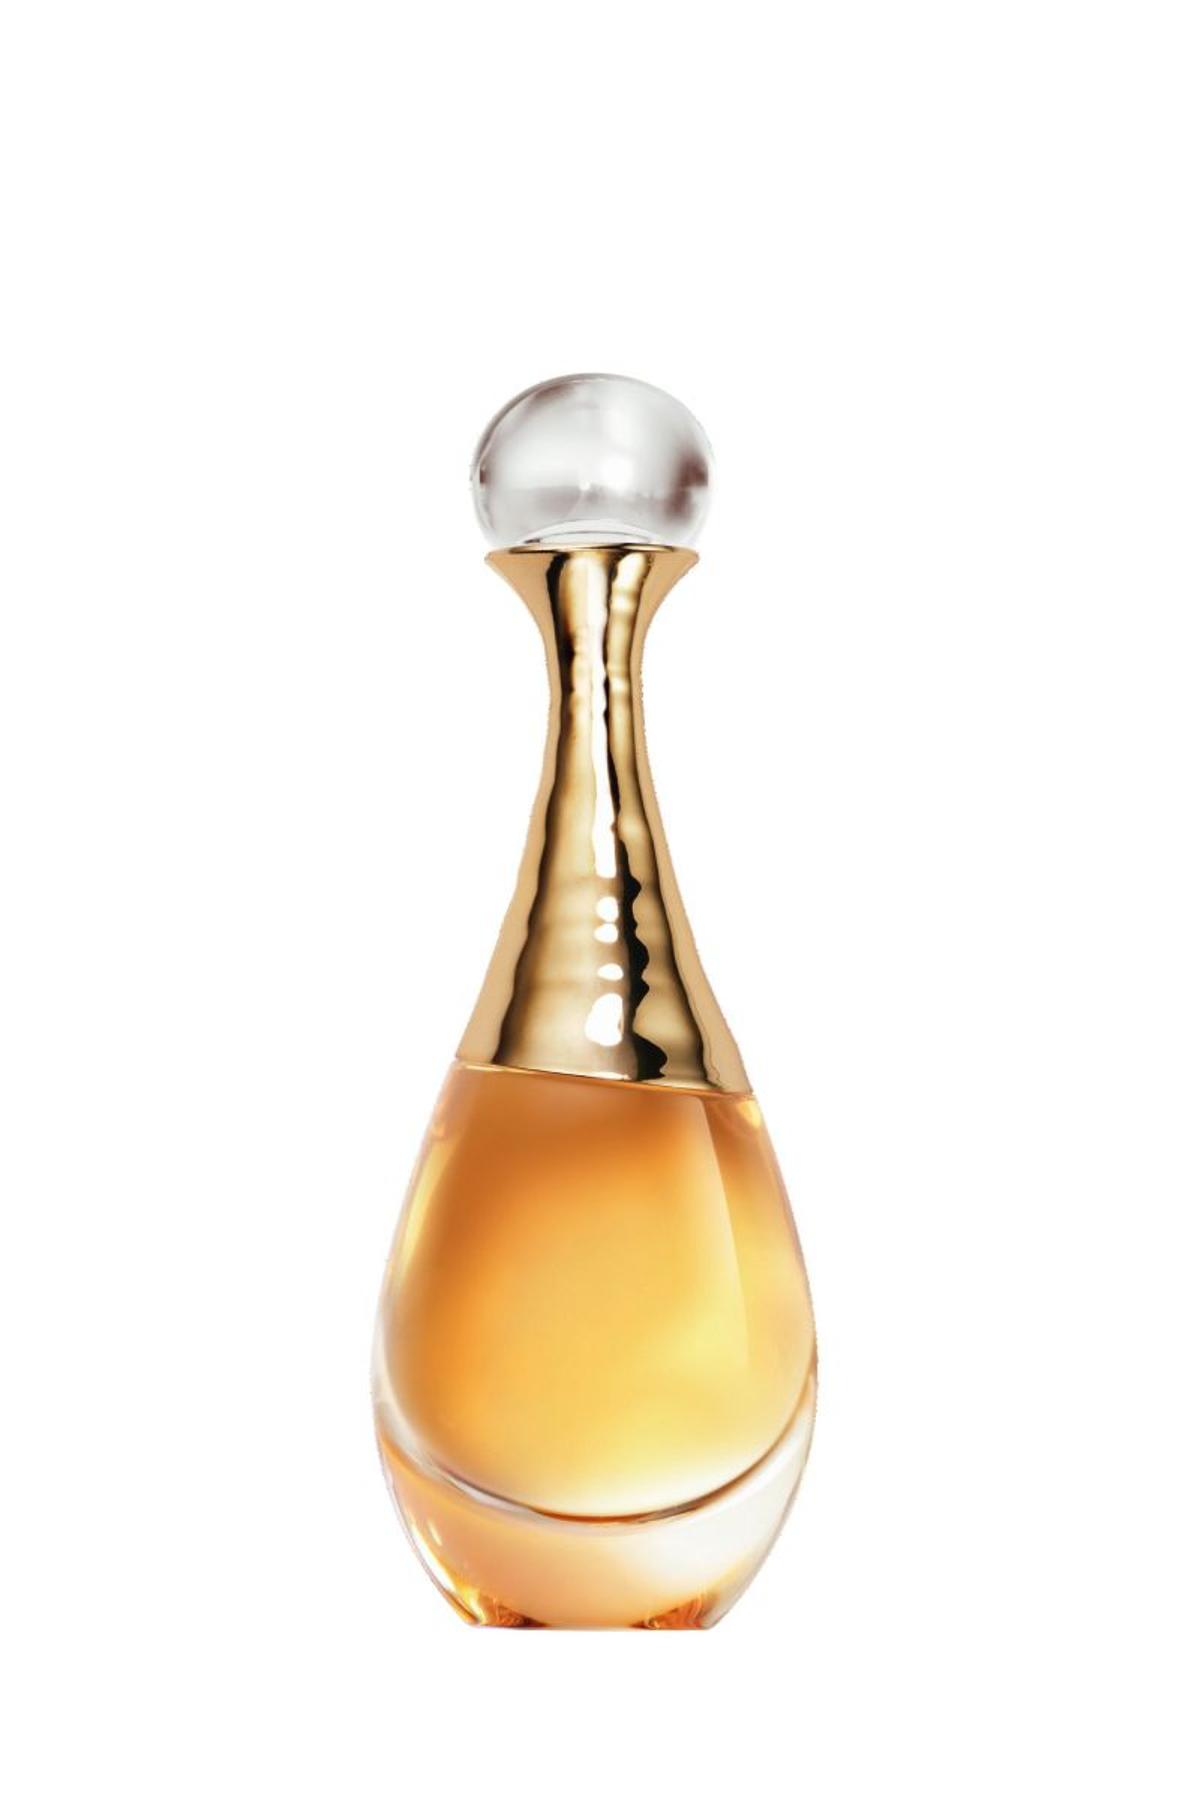 Premio Perfumista: Francis Kurkdjian, de Dior